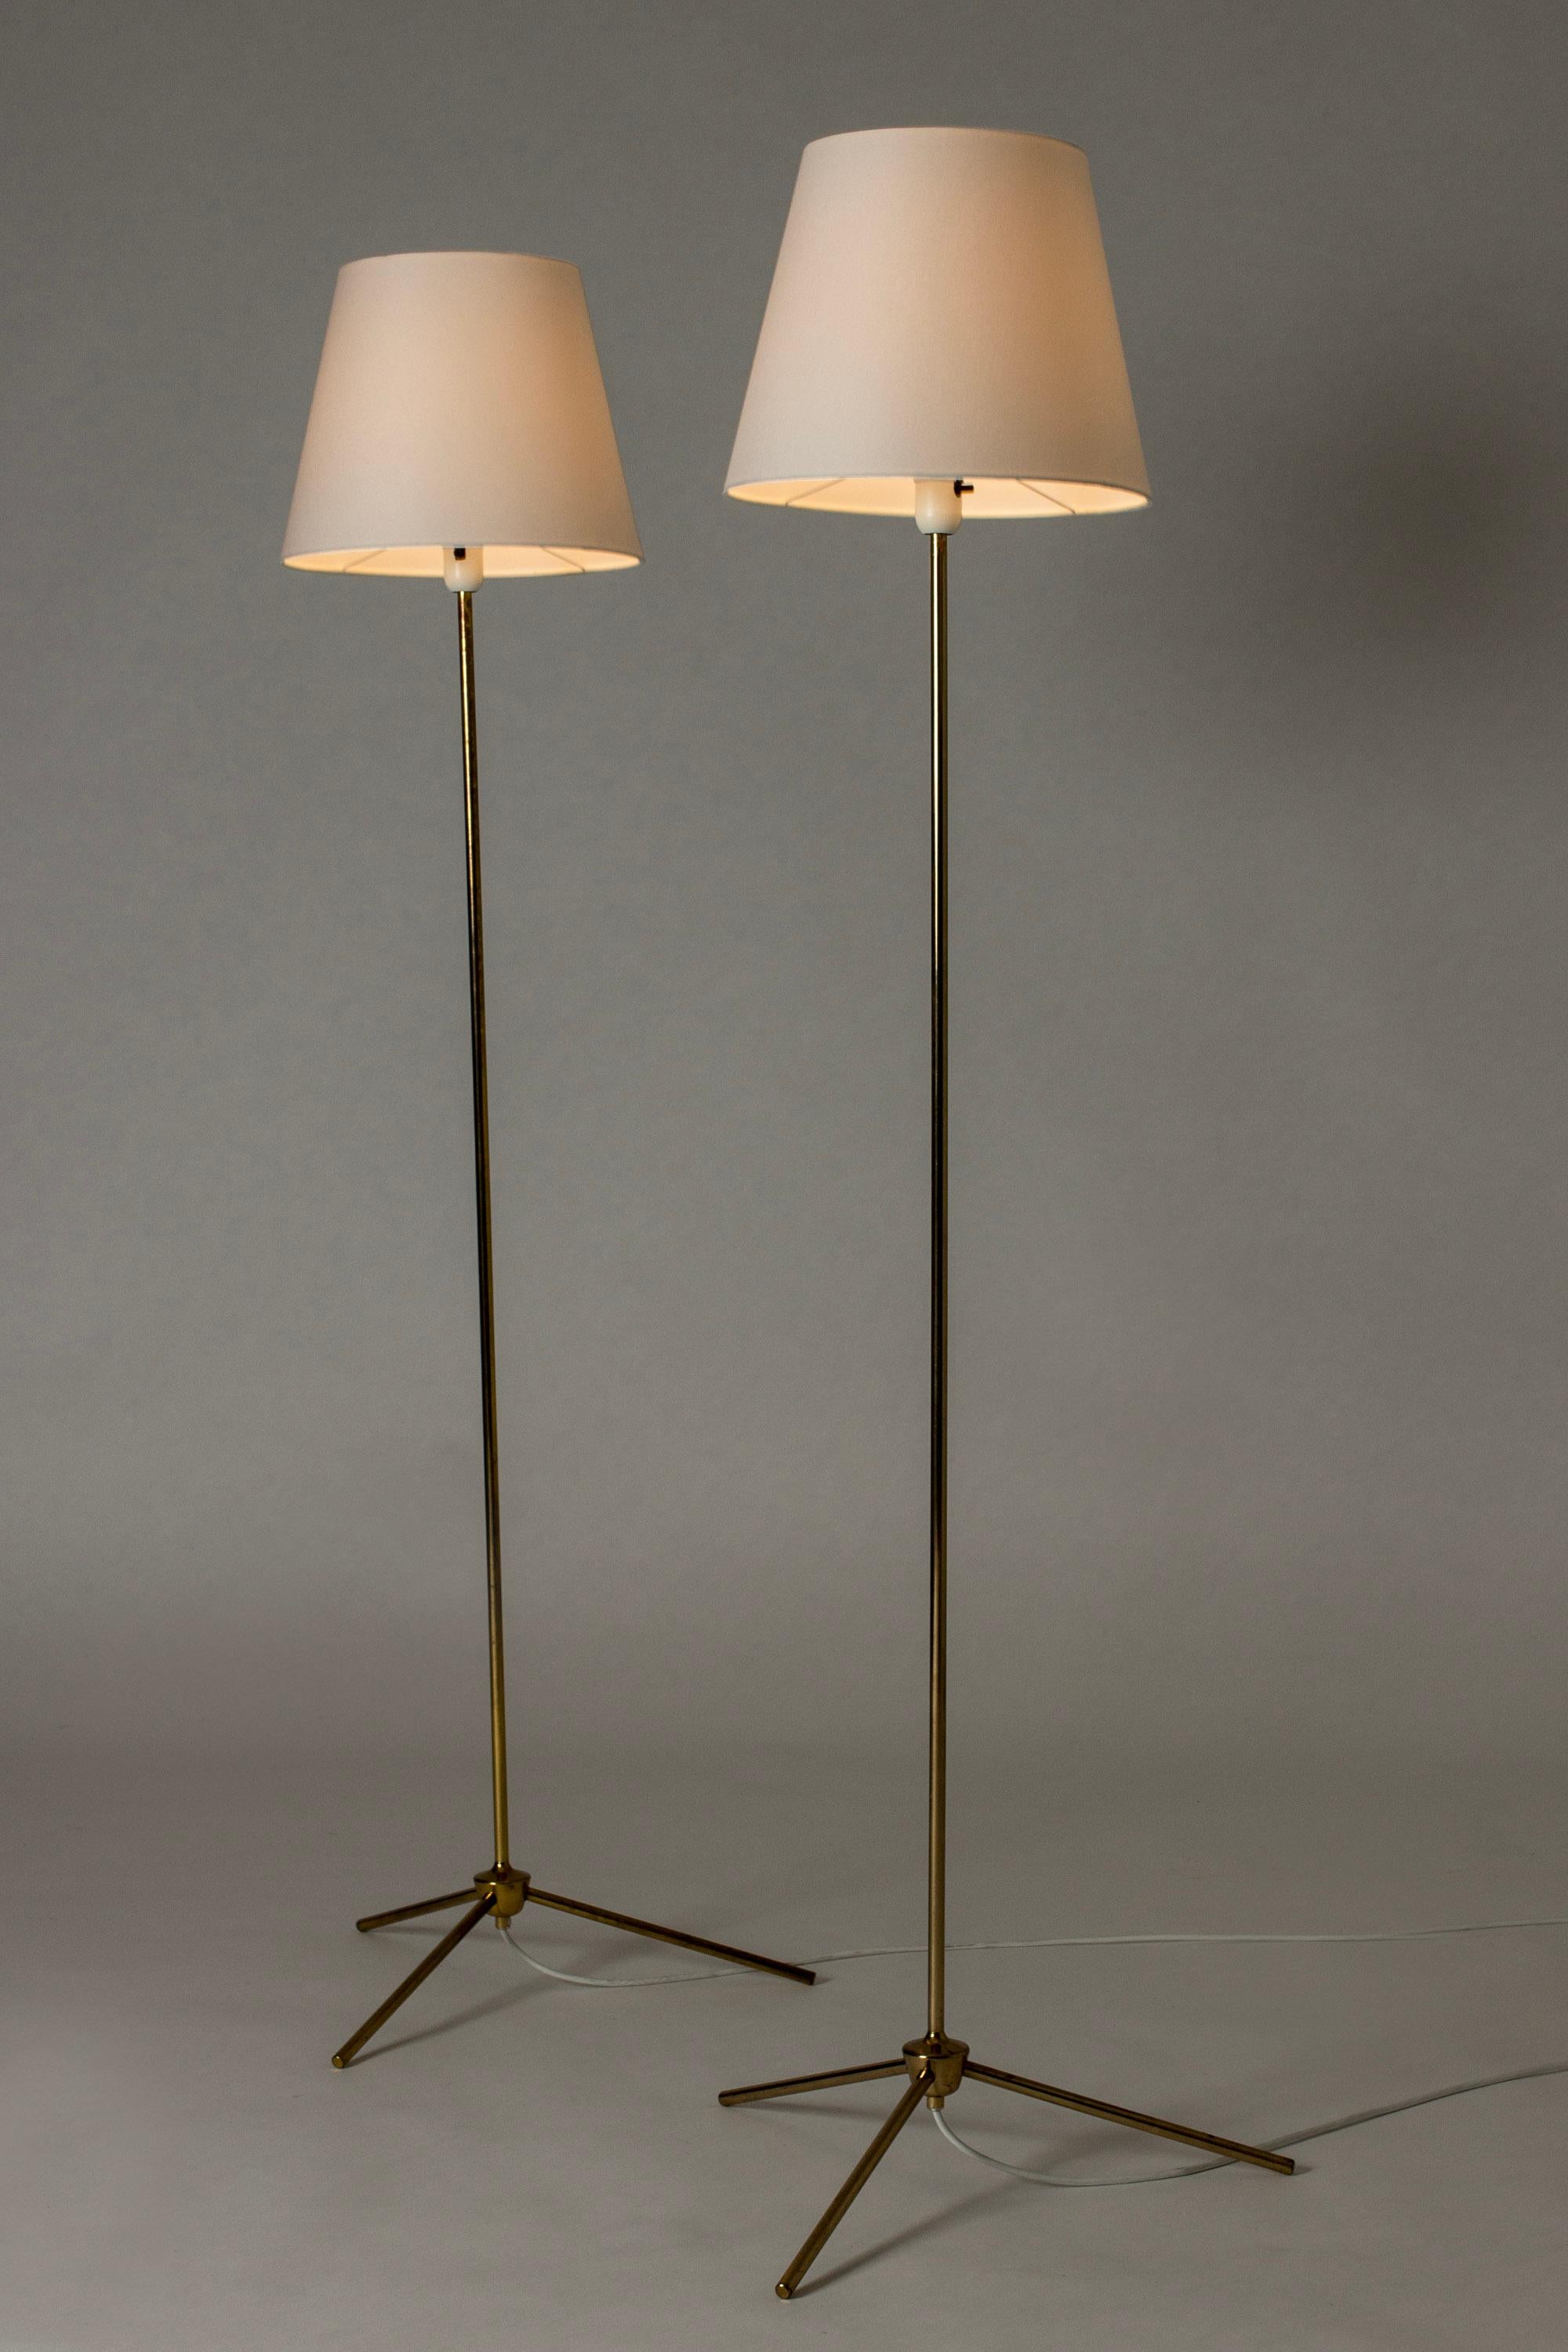 Swedish Midcentury Floor Lamps from Bergboms, Sweden, 1950s For Sale 1